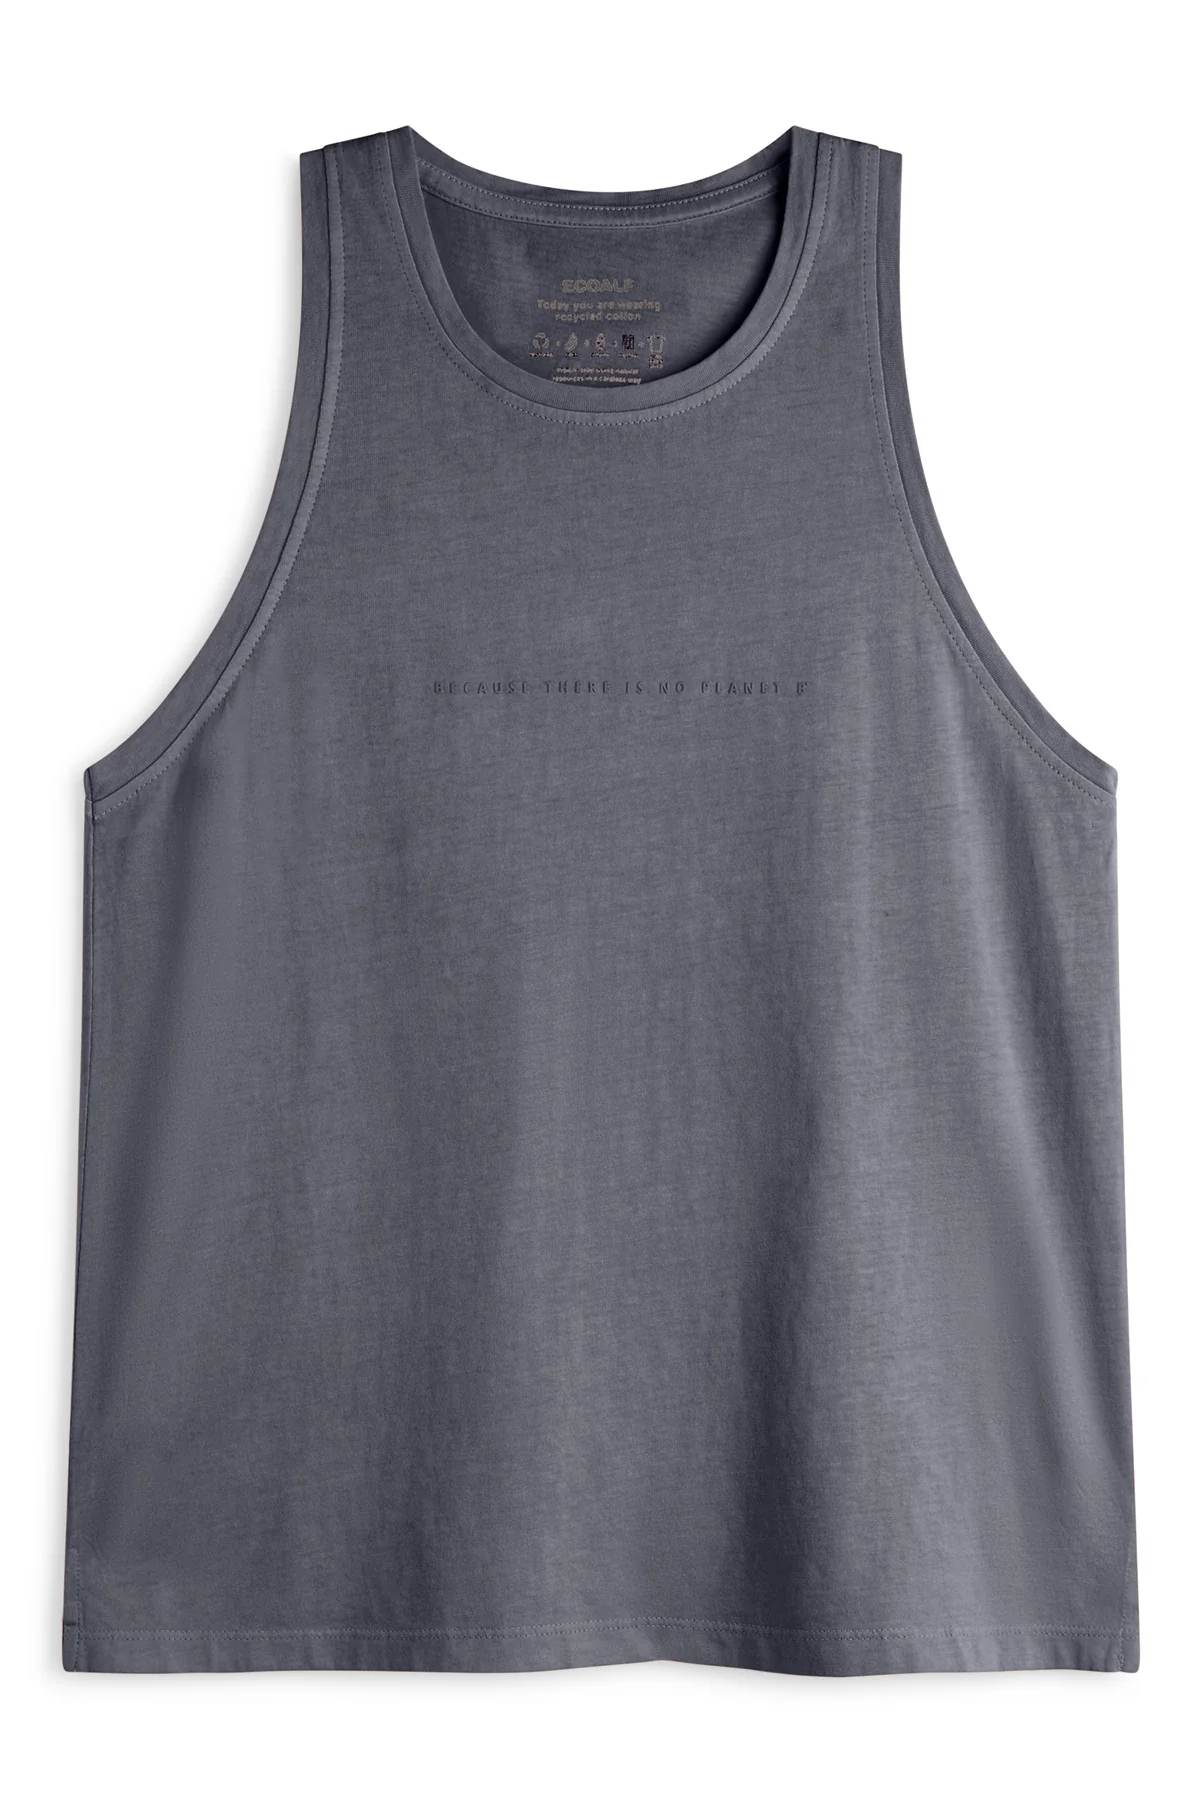 ECOALF camiseta sin mangas color gris - 3